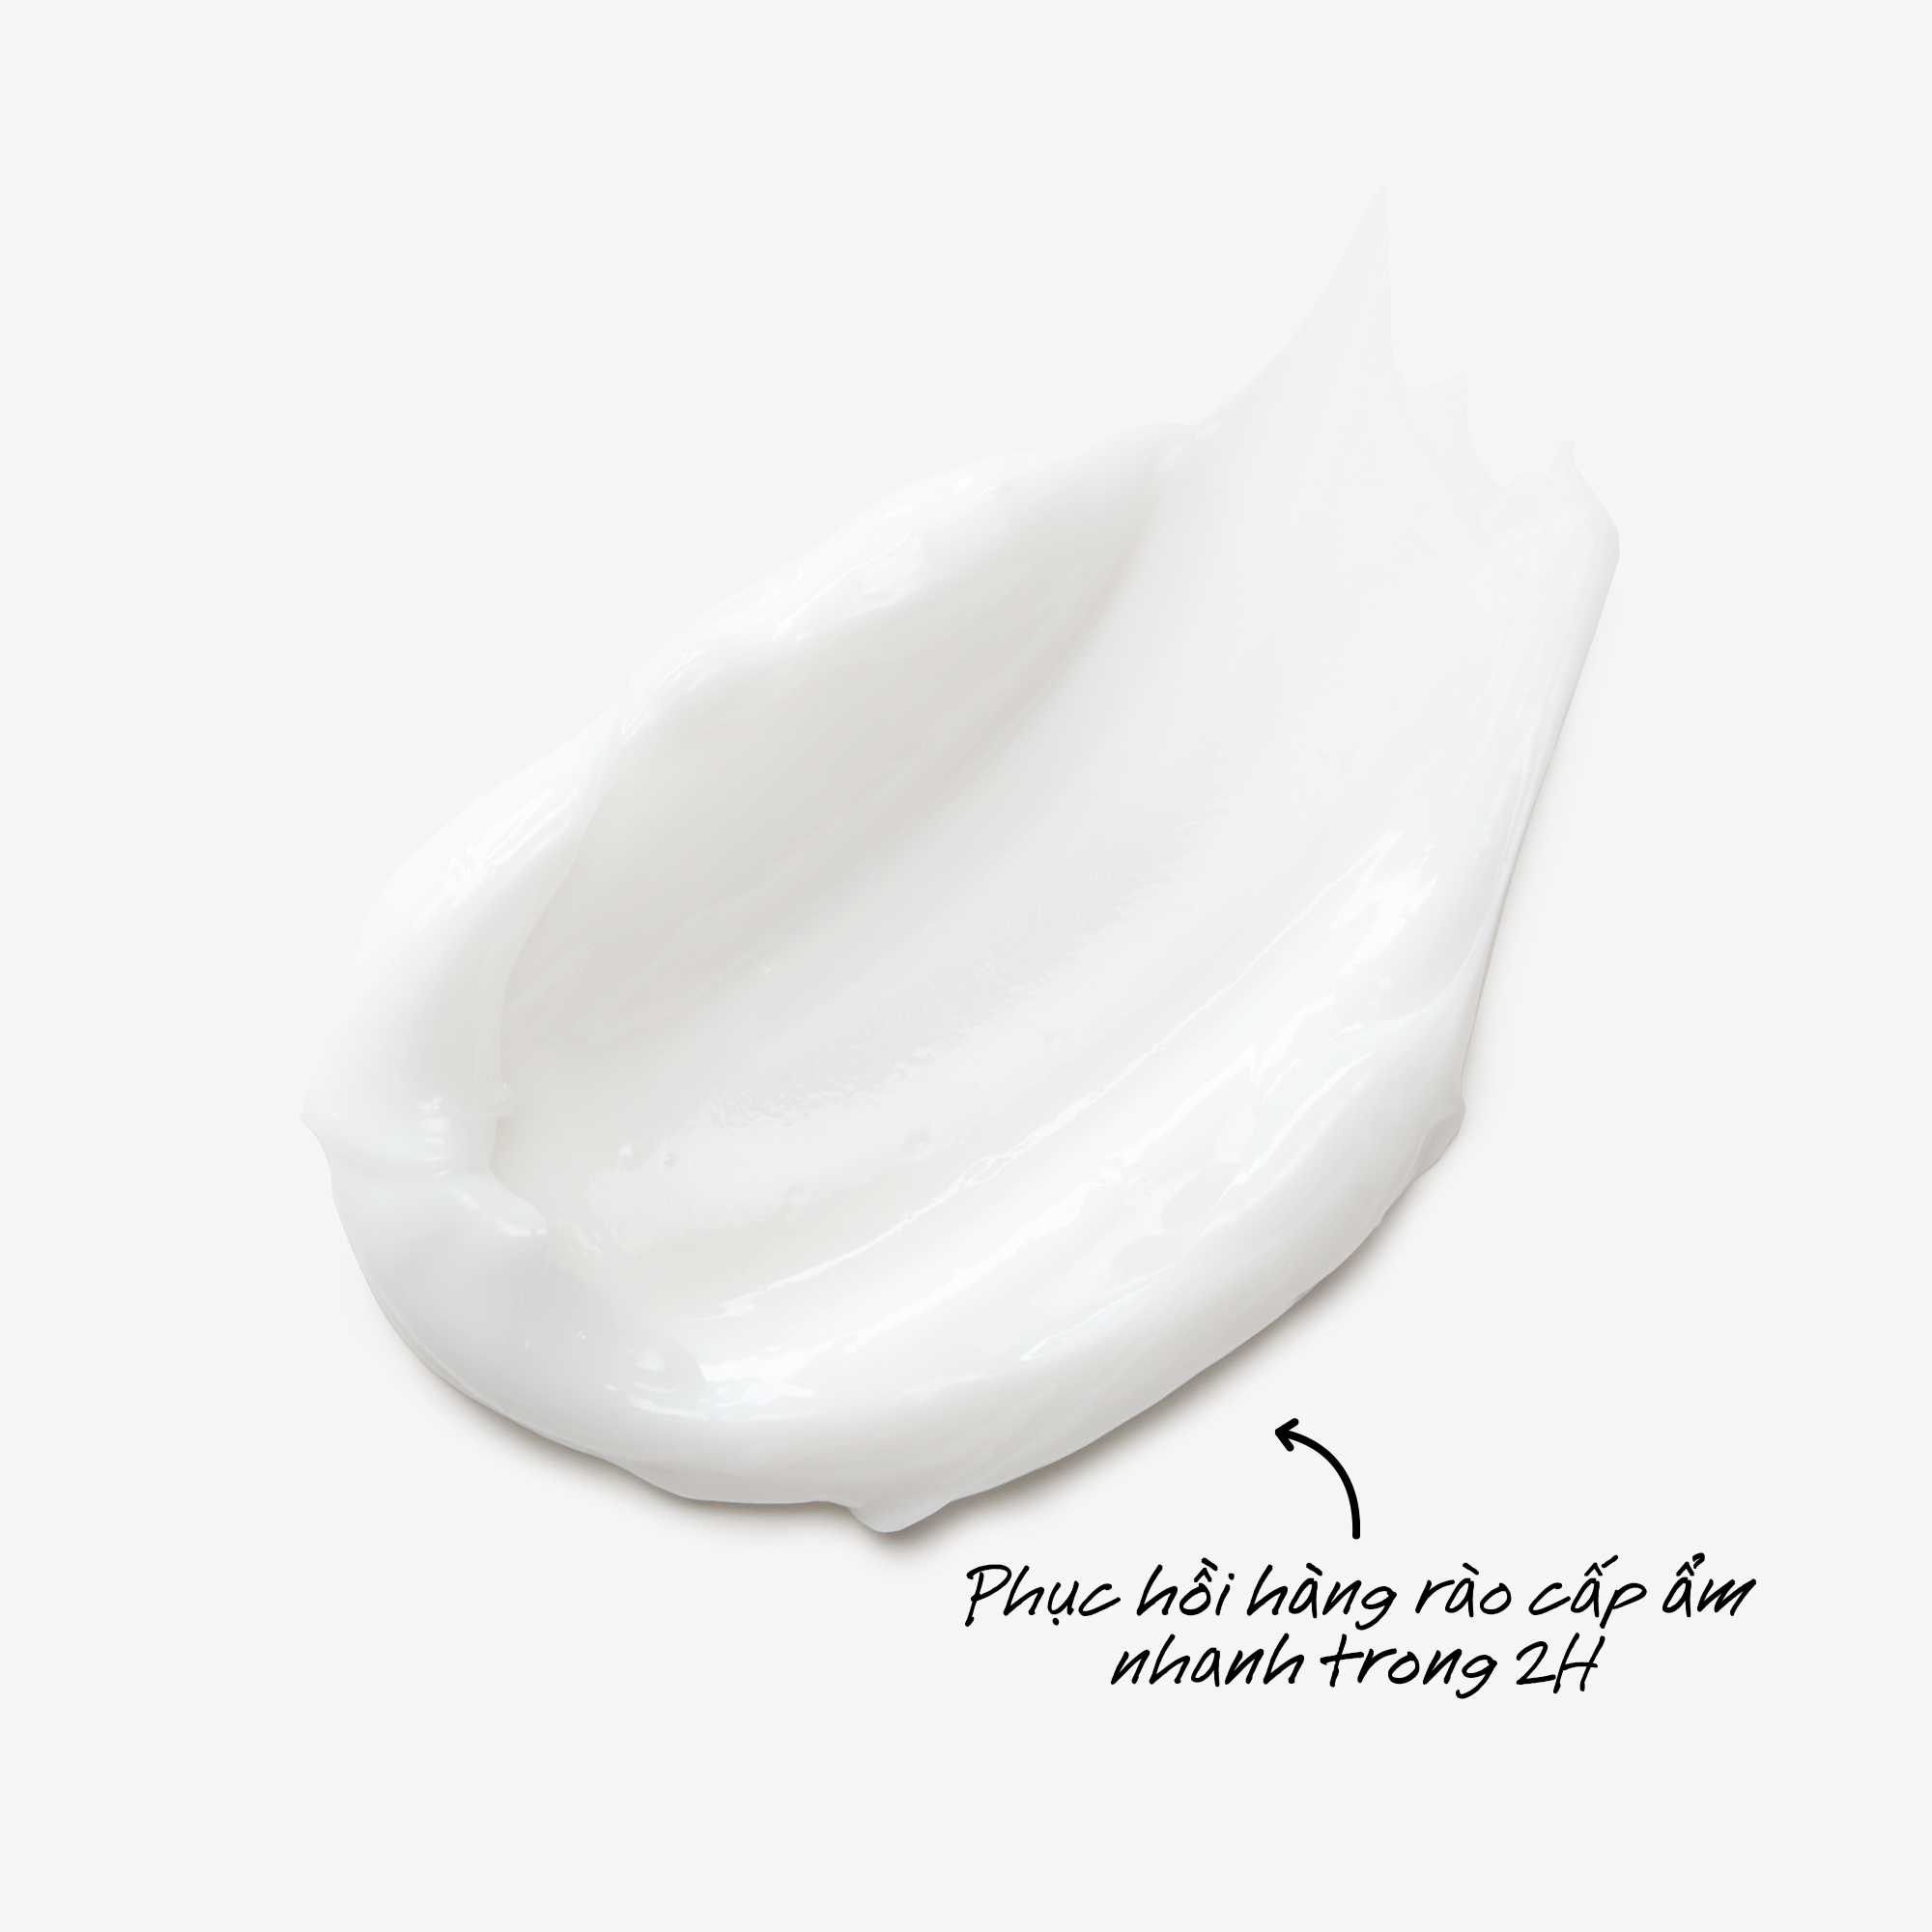 Kem dưỡng ẩm Kiehl's Ultra Facial Cream 28ml